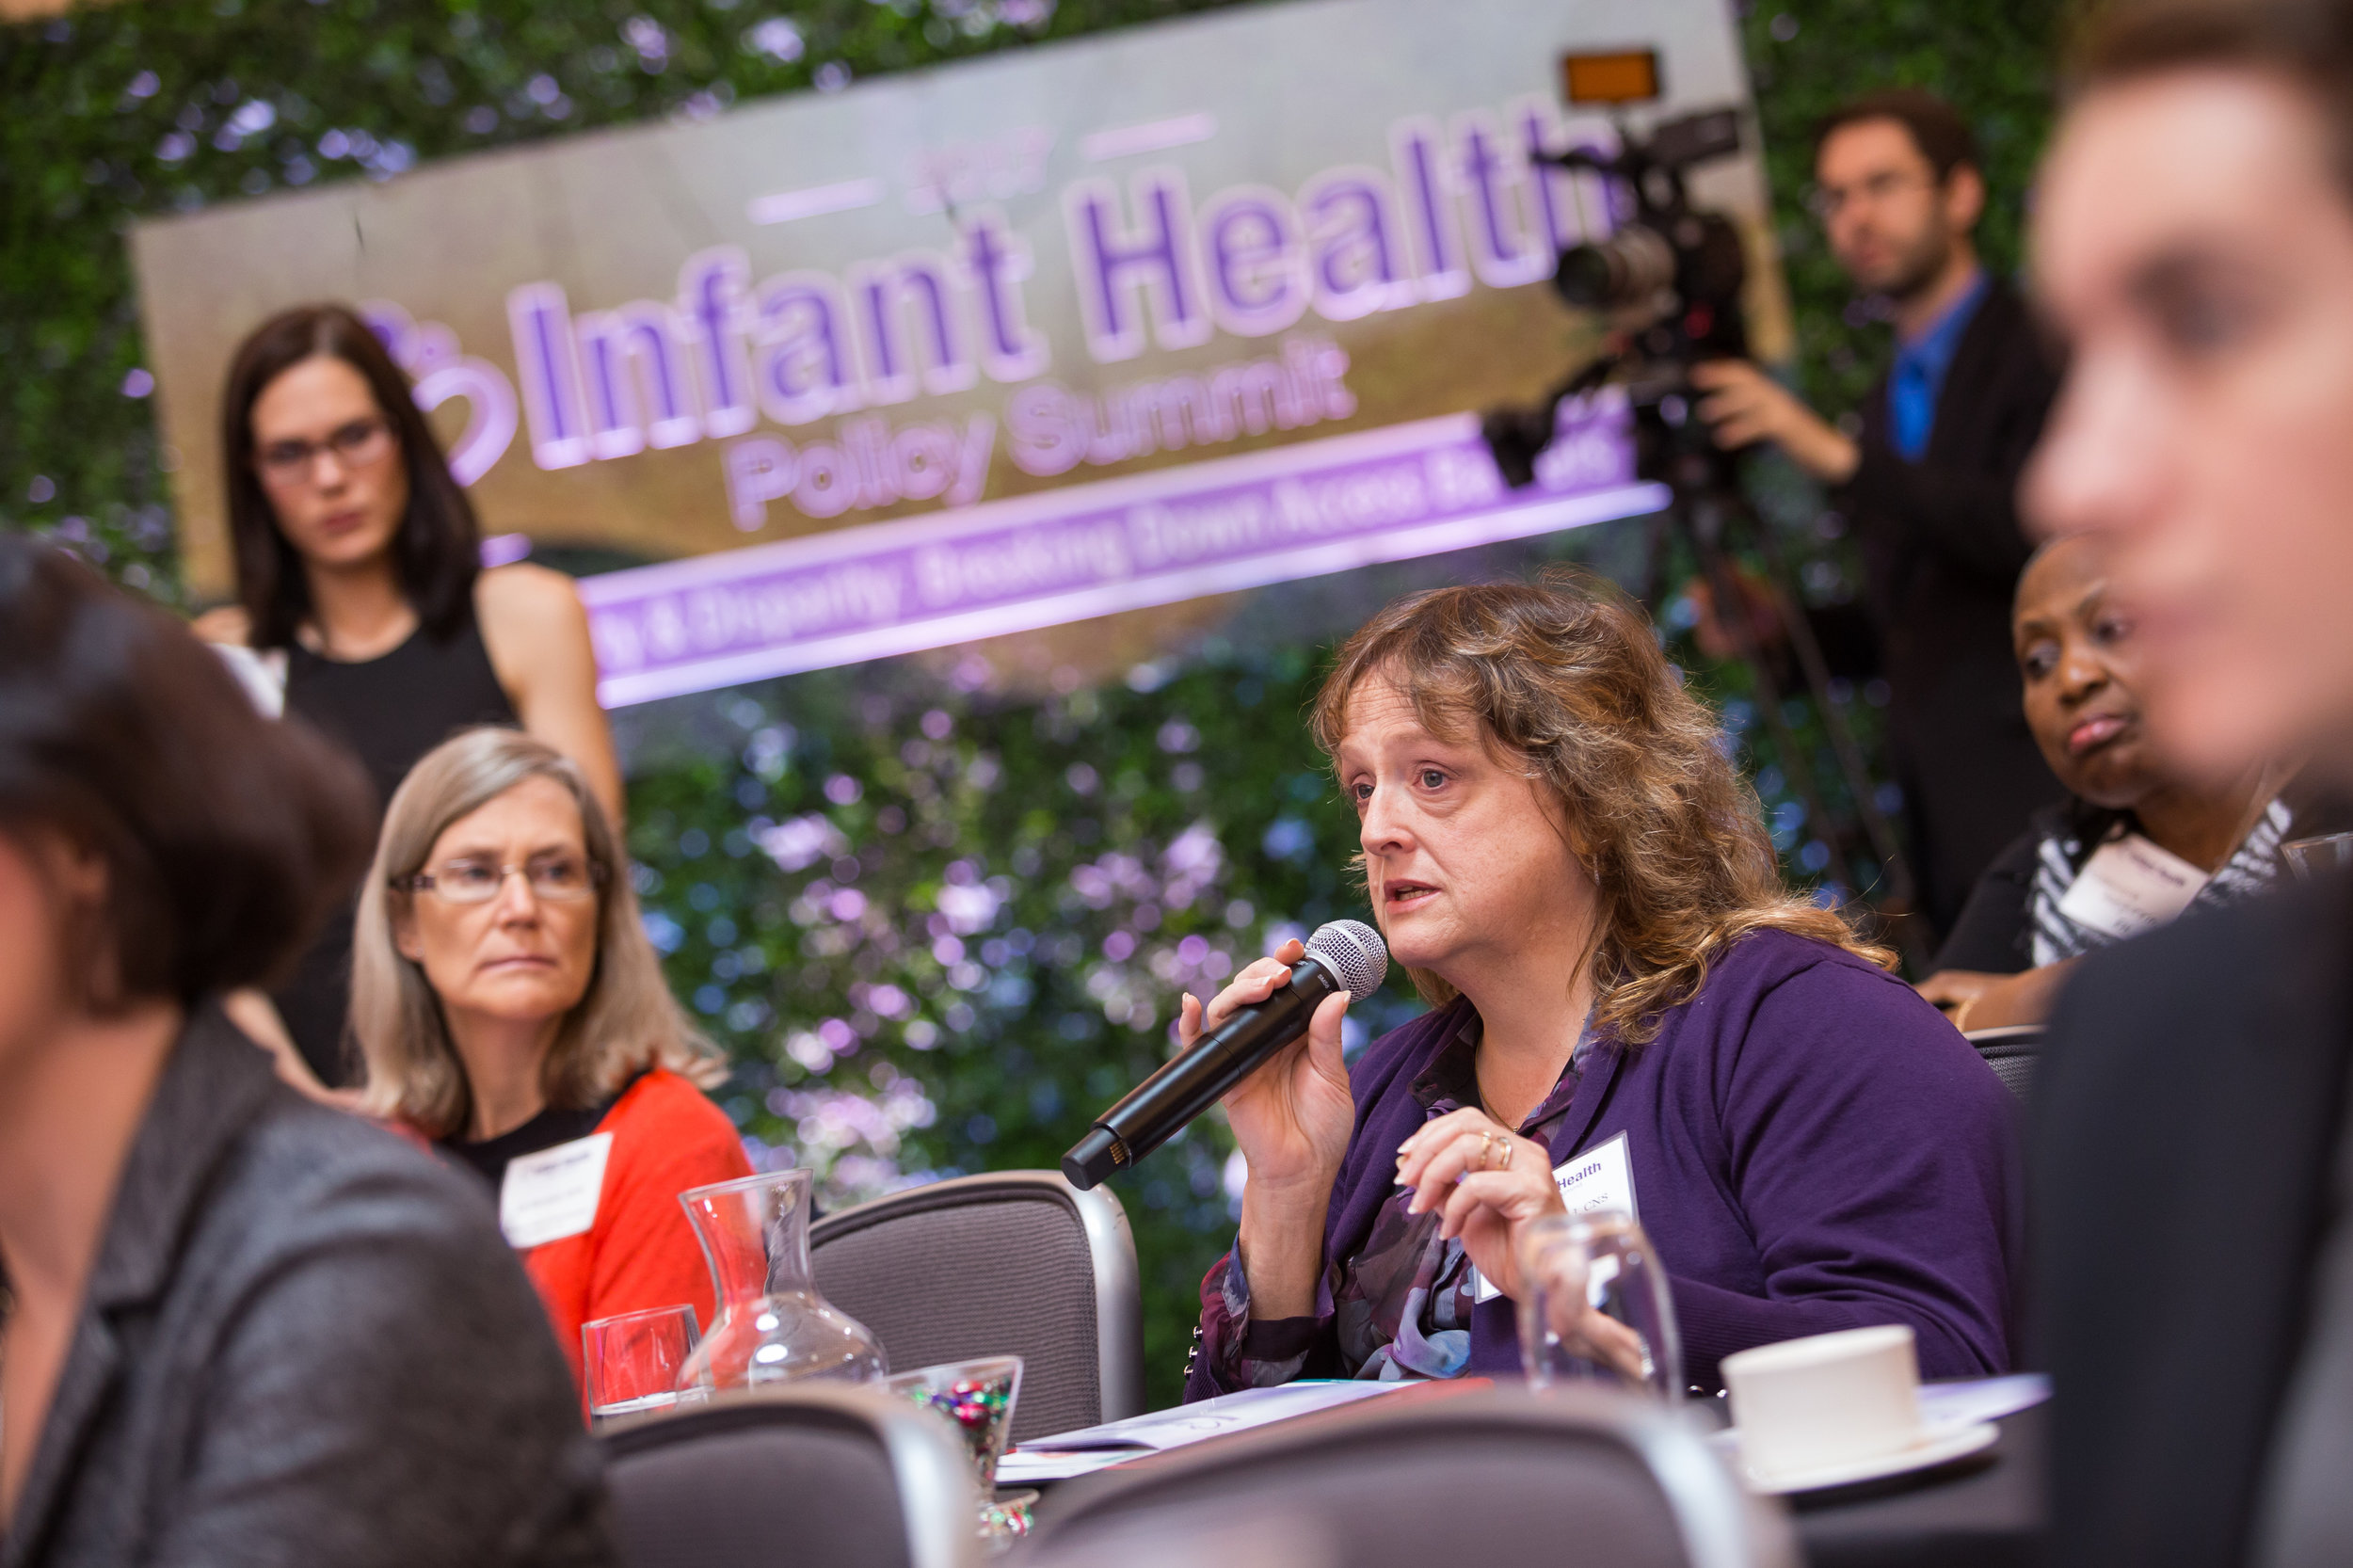 Infant Health Policy Summit - Jason Dixson Photography - 110542 - 1651.jpg